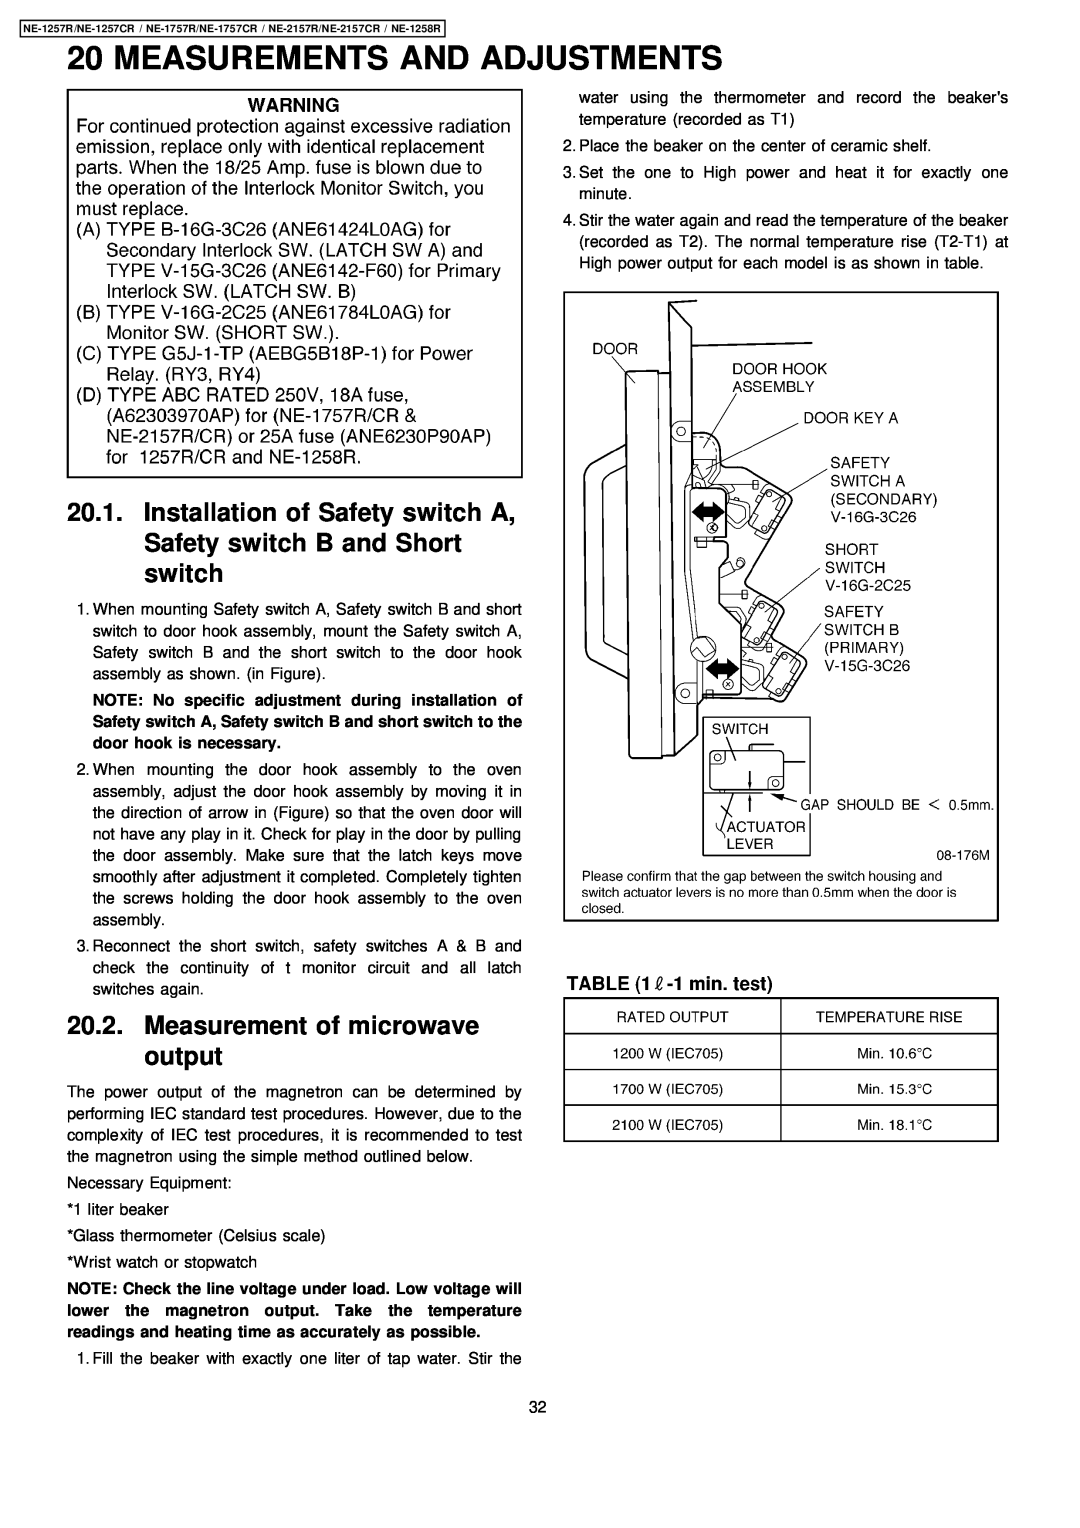 Panasonic NE-1257CR, NE-2157CR, NE-1757CR manual Measurements And Adjustments, Measurement of microwave output 